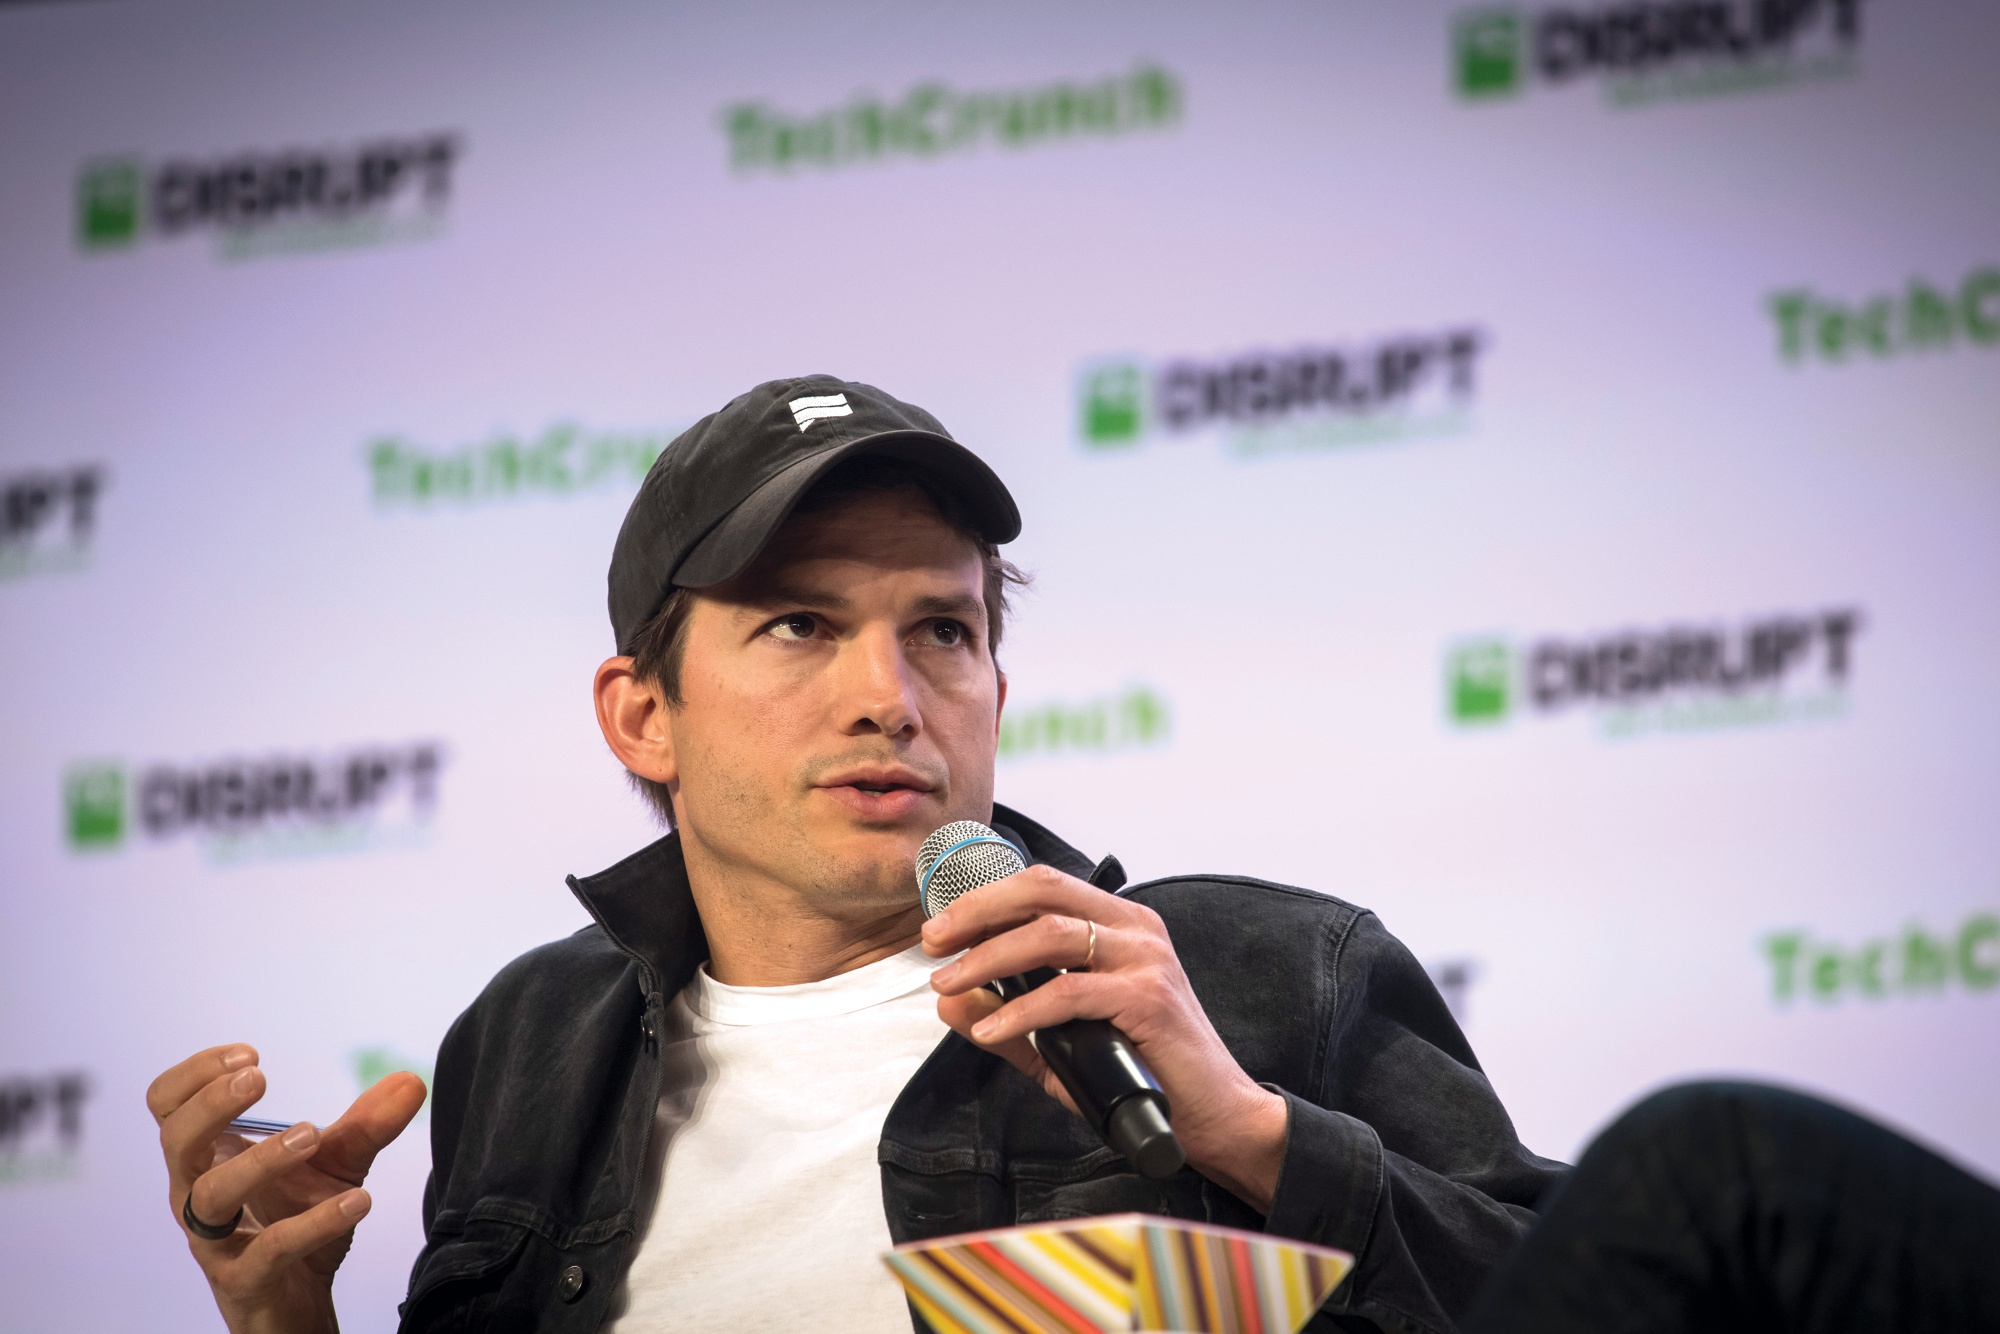 Actor Ashton Kutcher, founding partner of Sound Ventures LLC, speaks during TechCrunch Disrupt 2019 in San Francisco